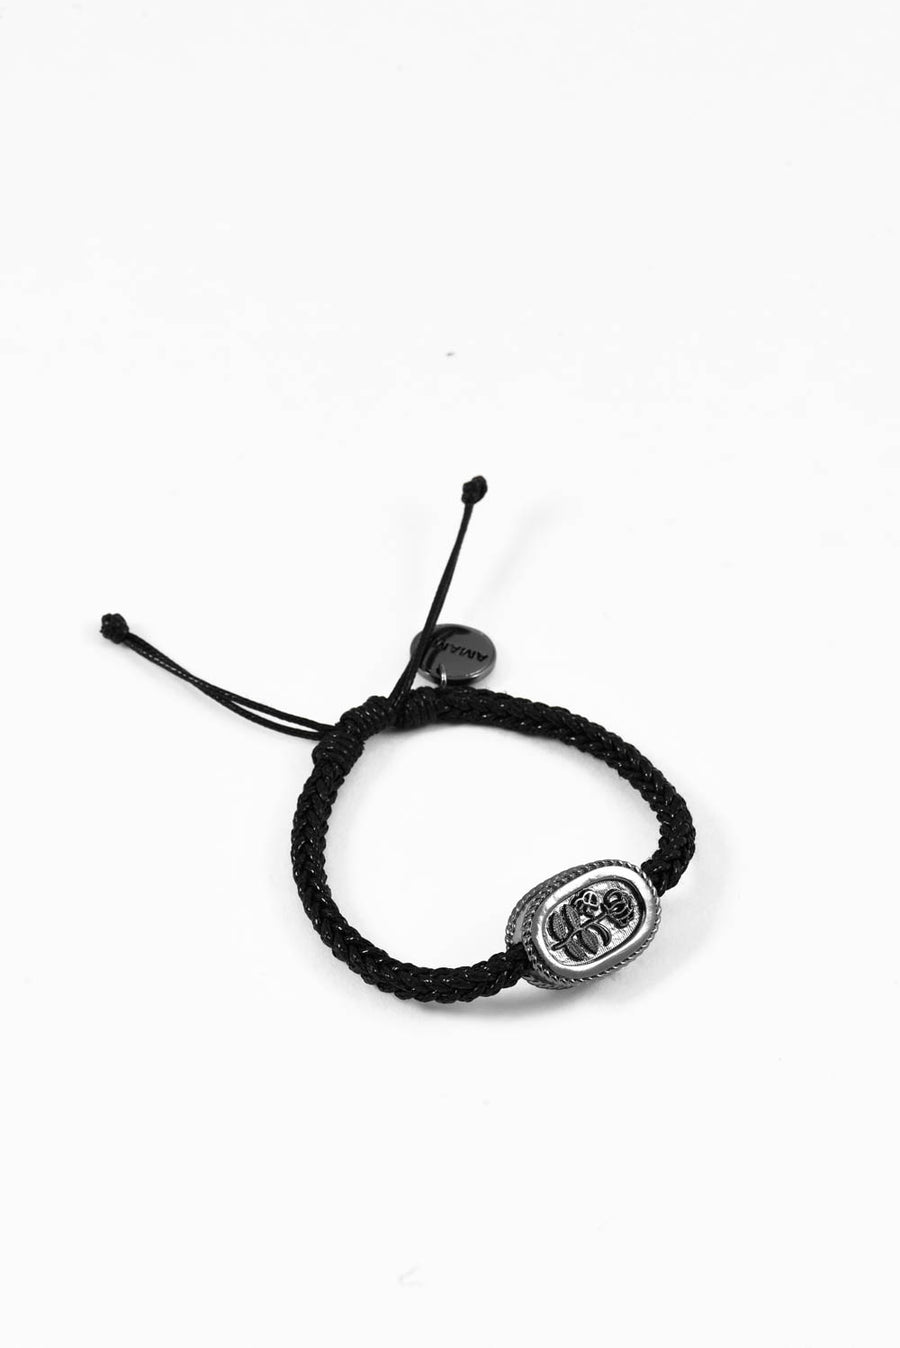 SubRosa Amulet Bracelet in Charcoal Black